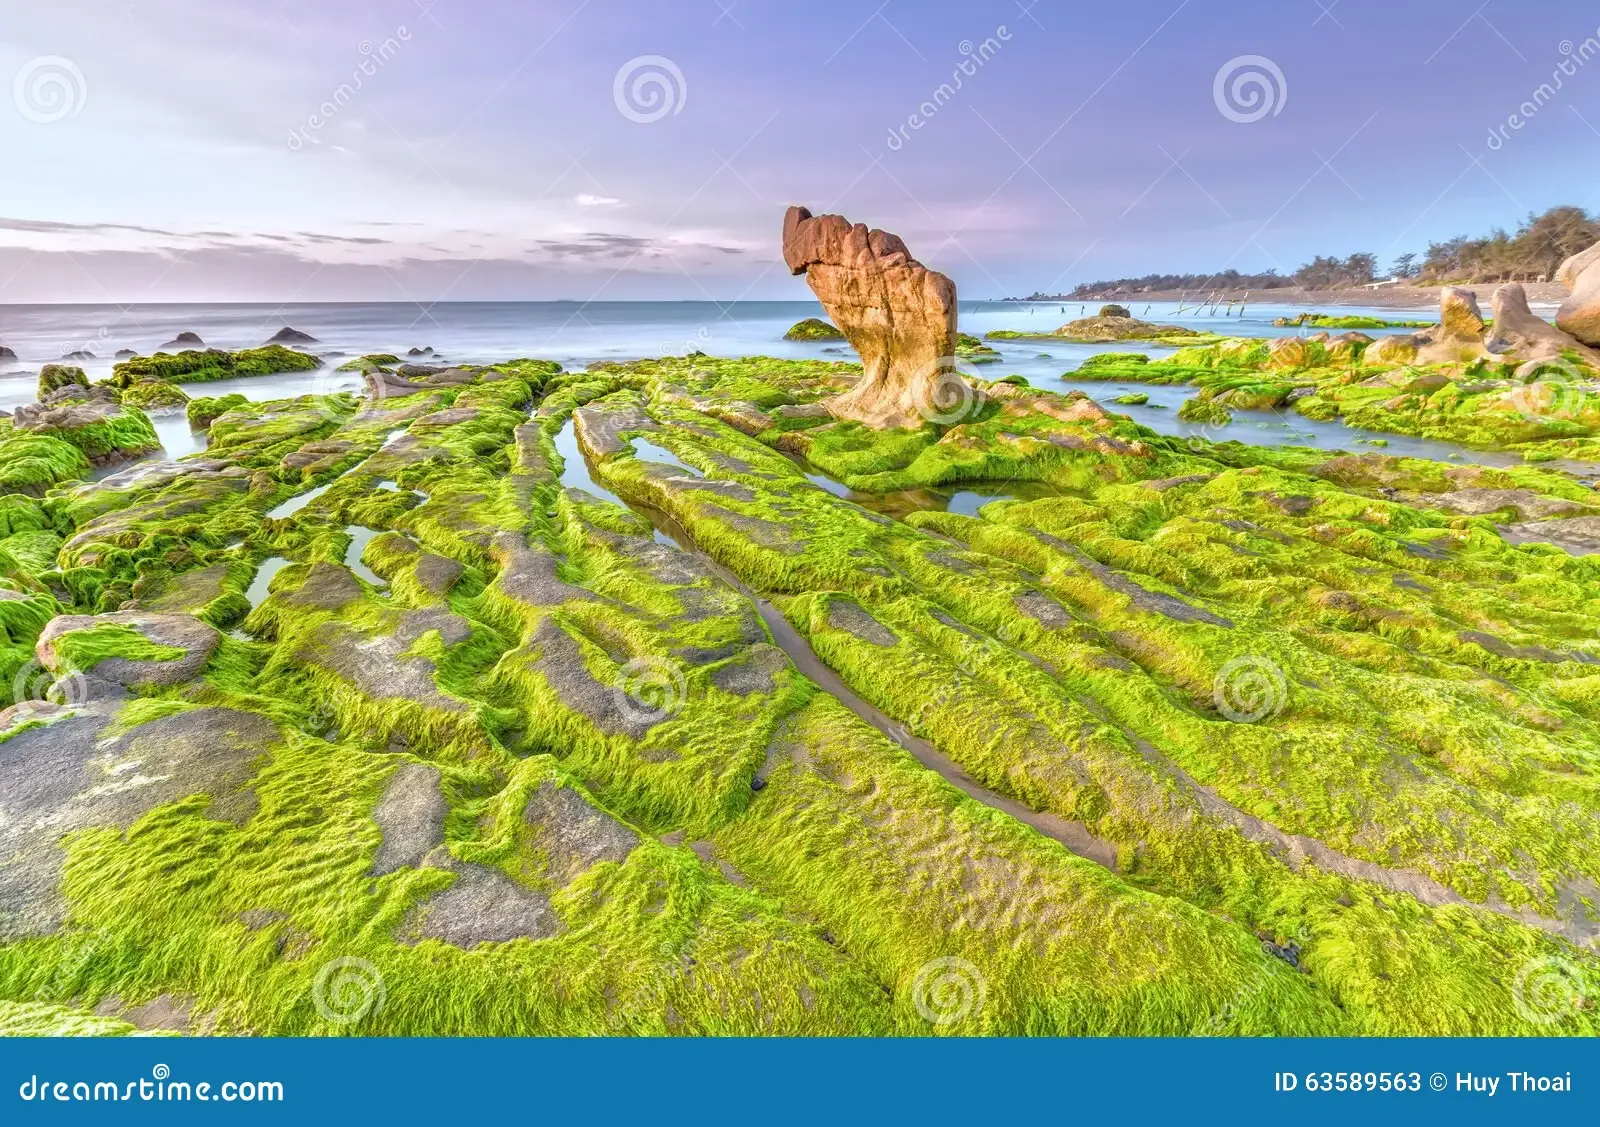 beach-moss-dawn-co-thach-bai-path-mossy-rocks-algae-led-to-large-stone-overlooking-sea-as-catch-beautiful-day-63589563.jpg